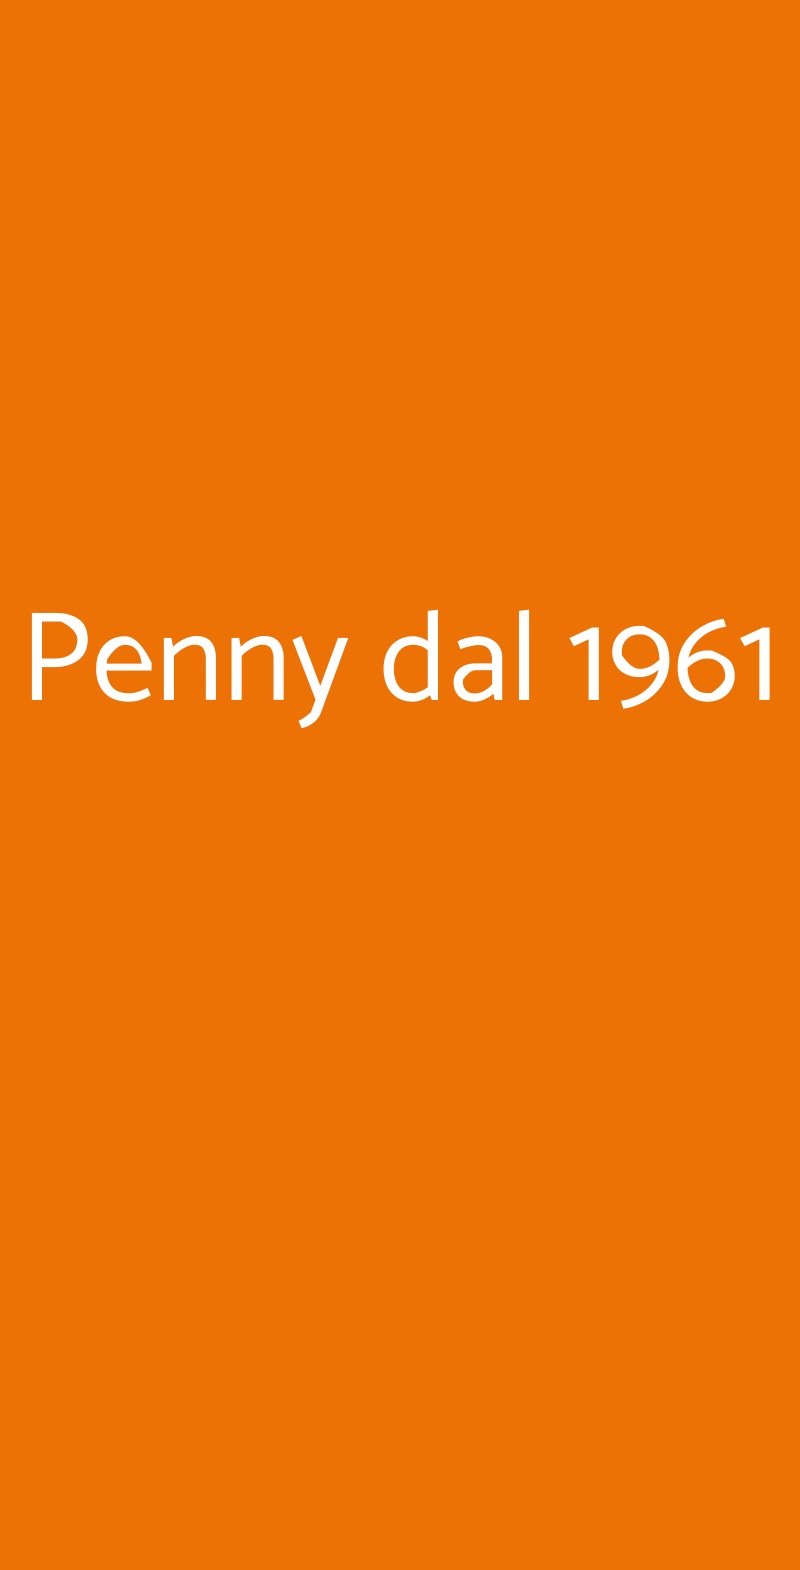 Penny dal 1961 Milano menù 1 pagina